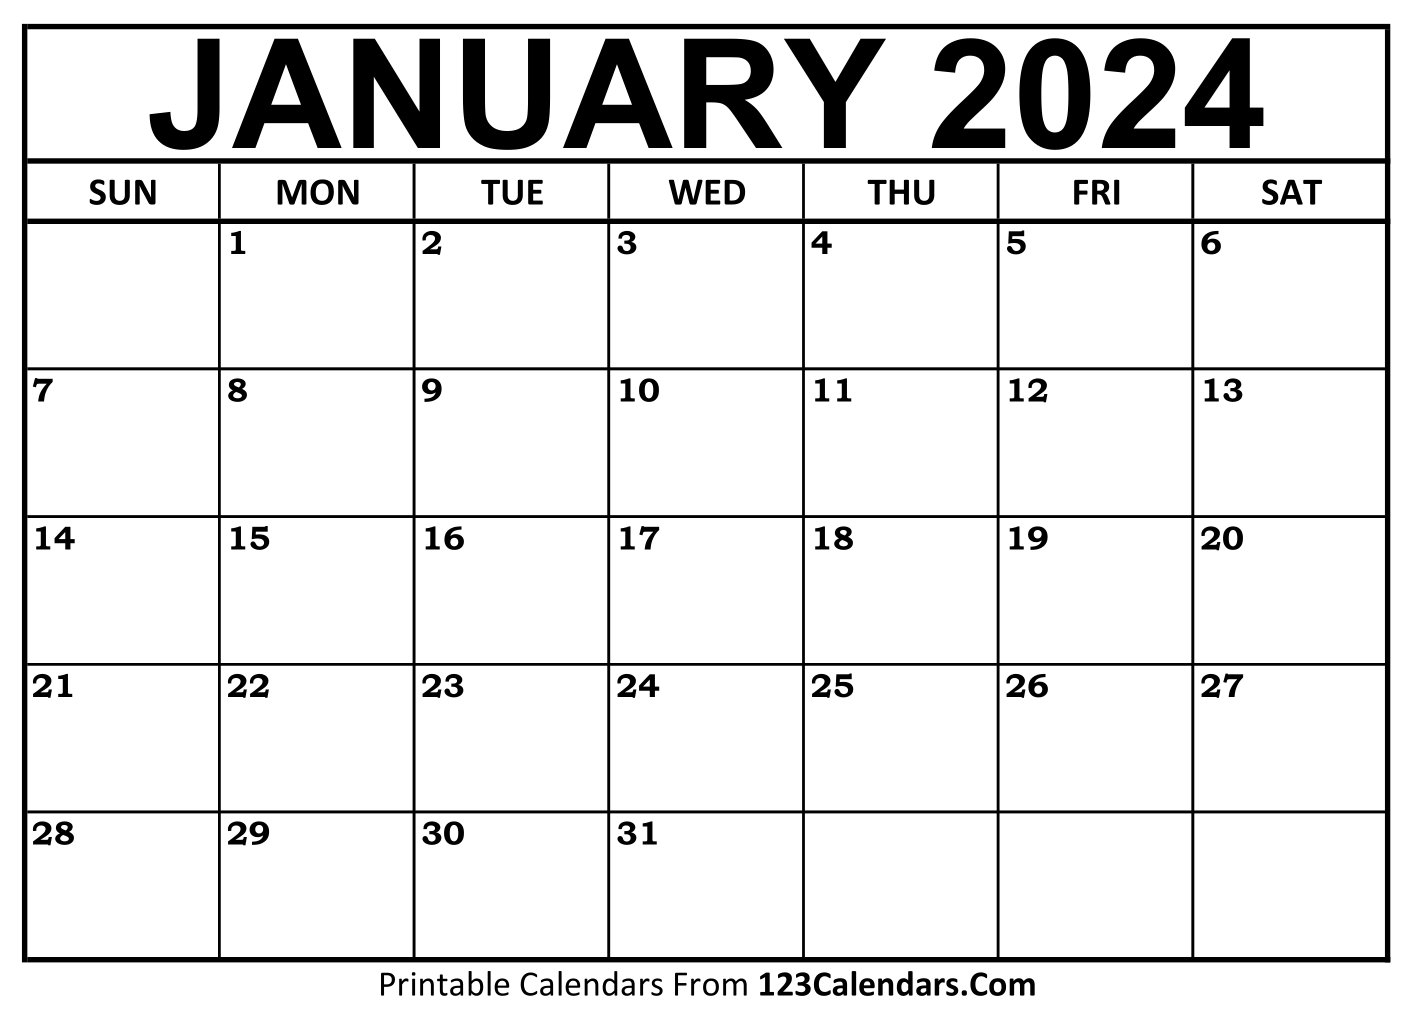 Printable January 2024 Calendar Templates - 123Calendars for Printable Calendar 2024 Jan